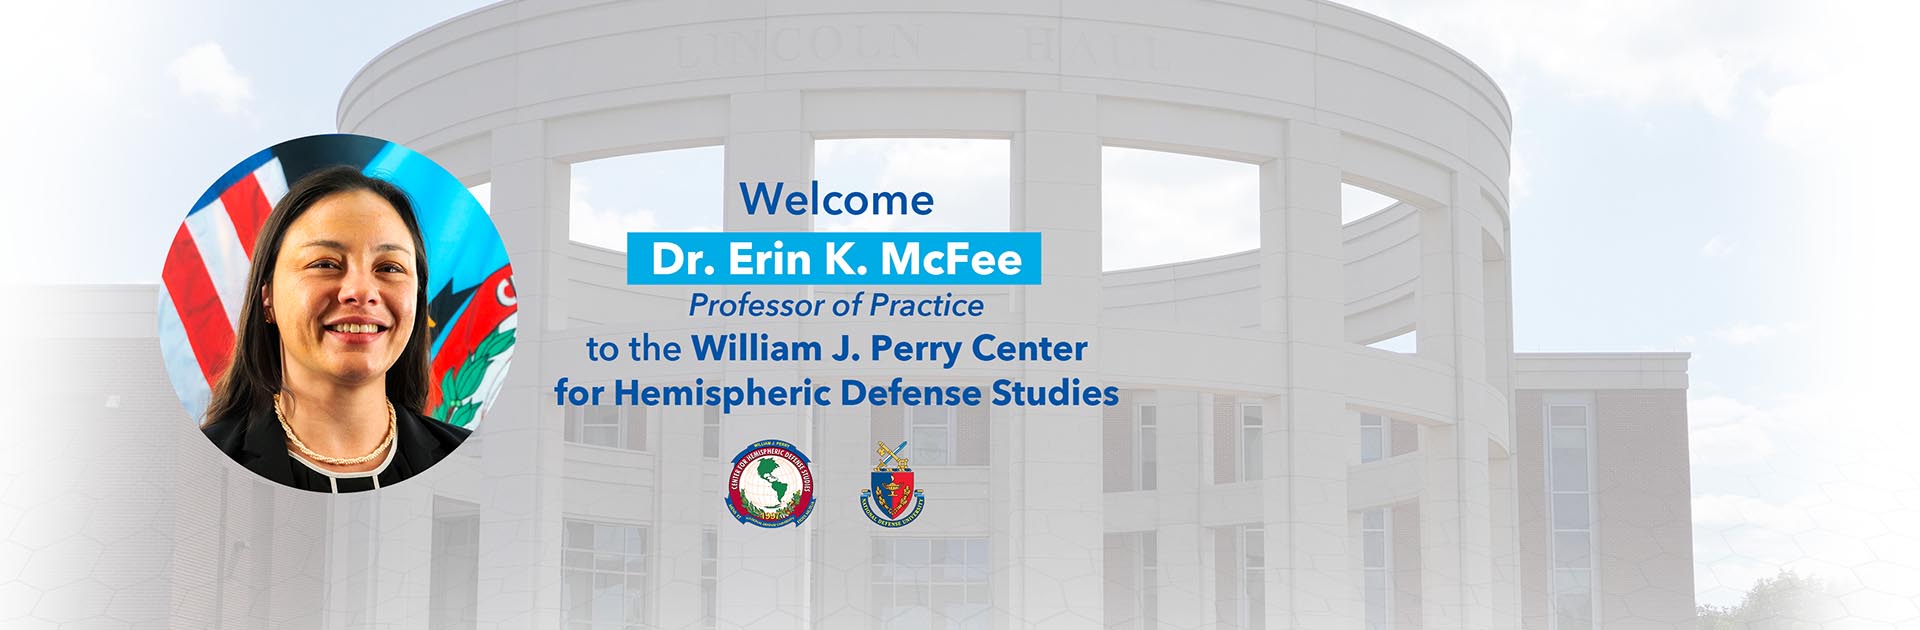 WJPC Welcomes Dr. McFee